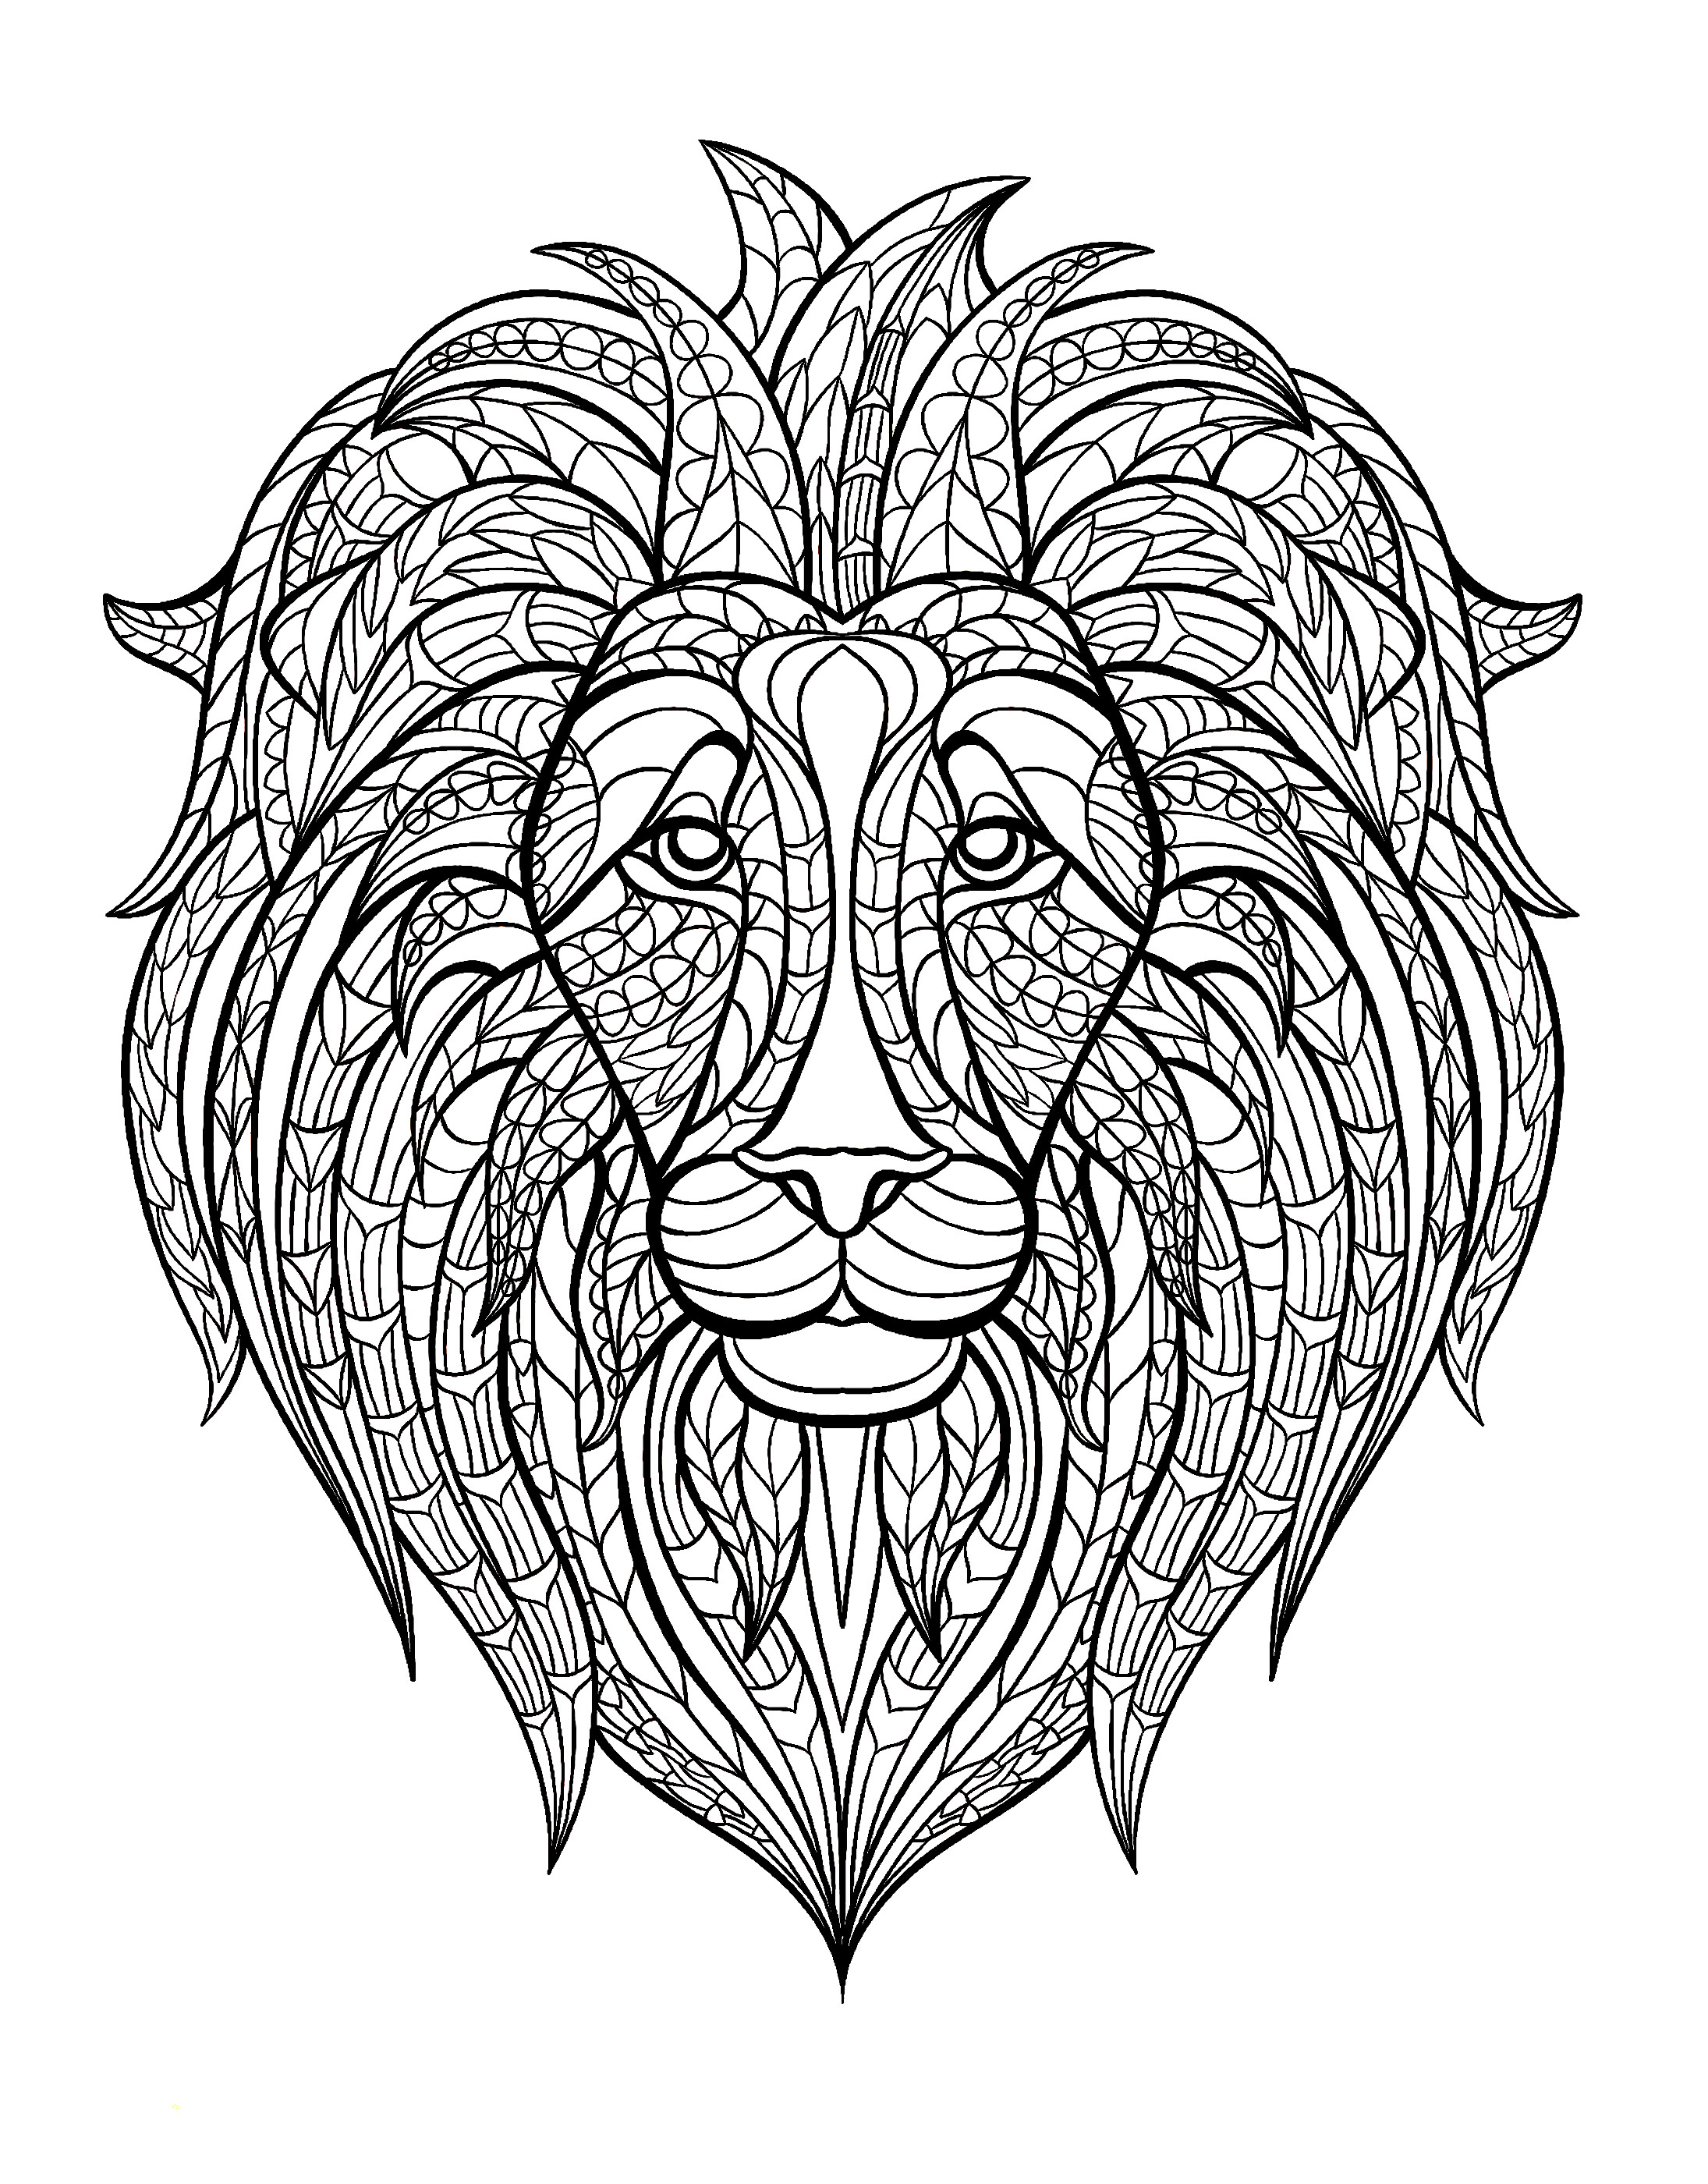 Tete lion